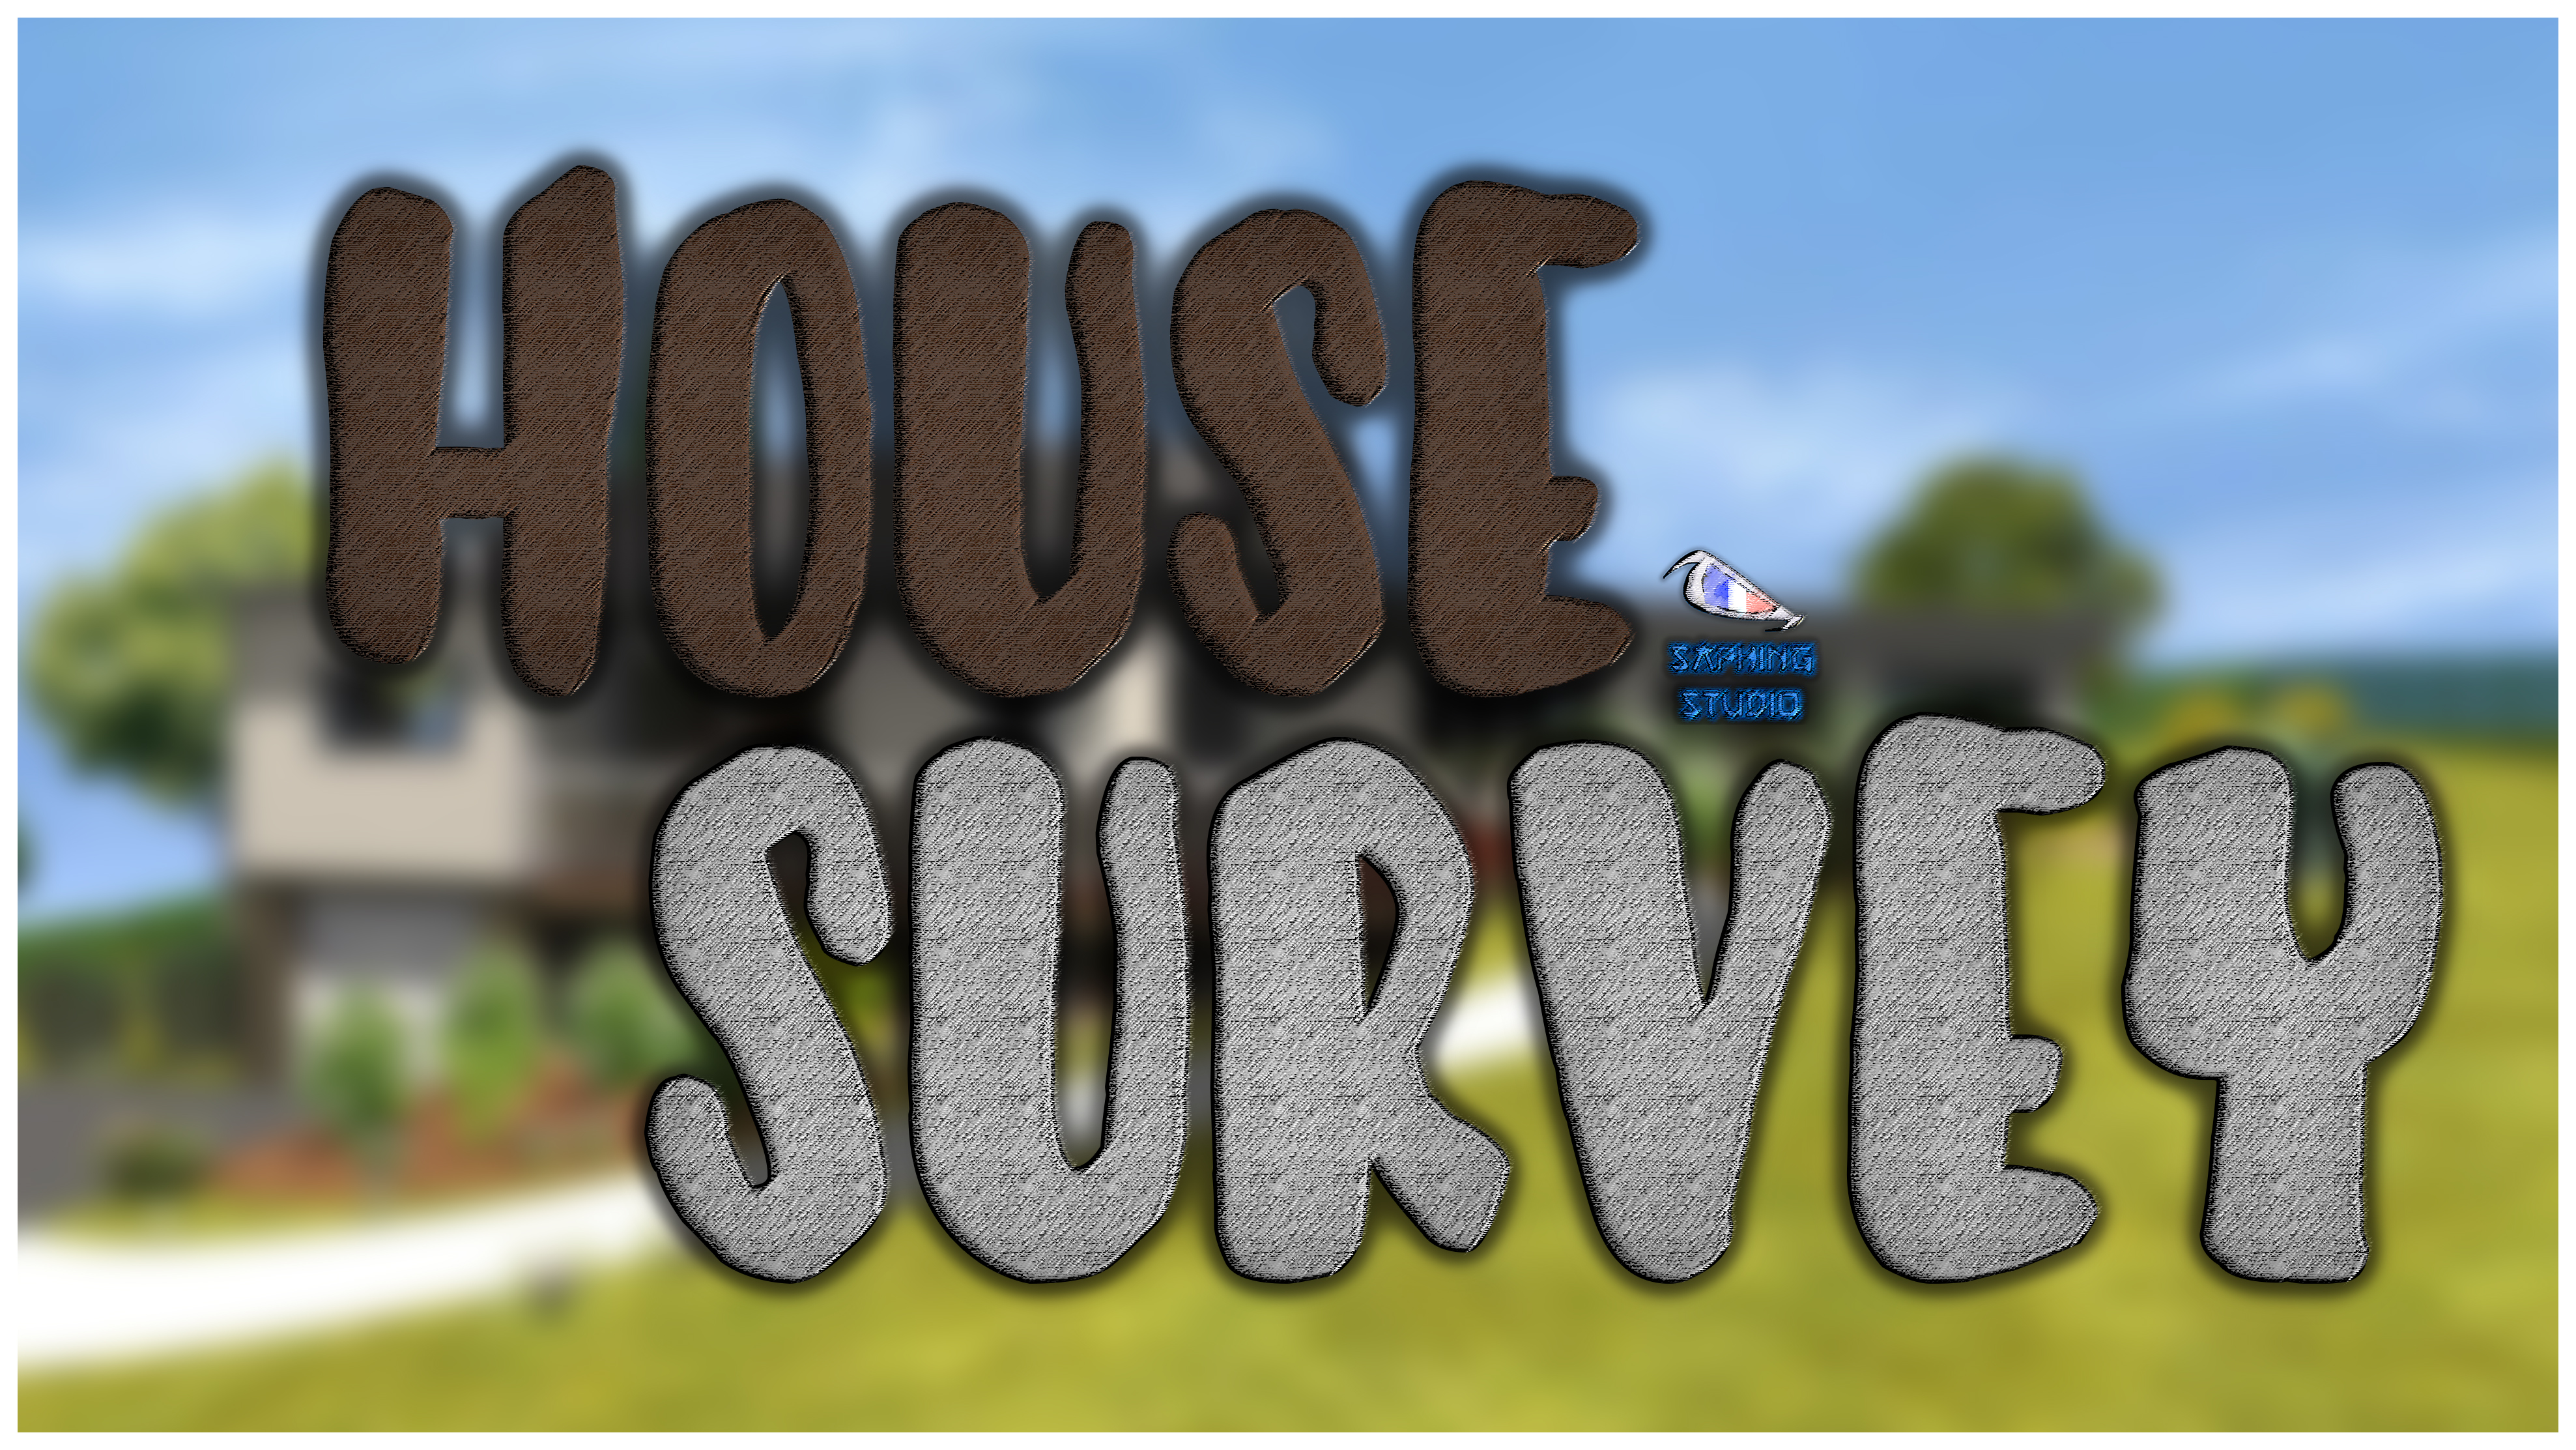 HOUSE SURVEY